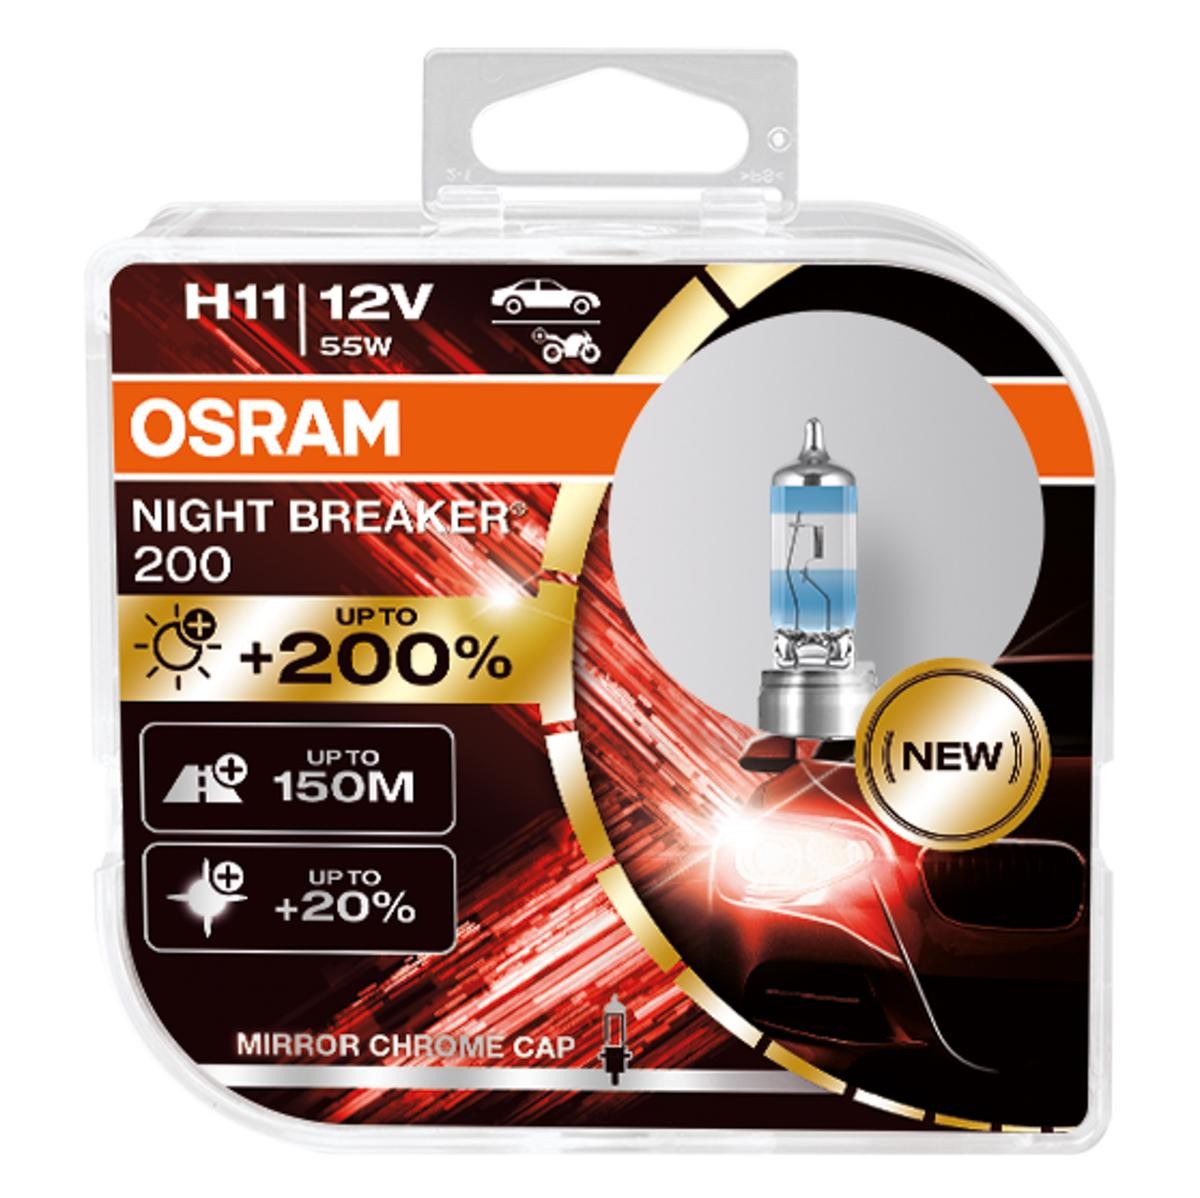 OSRAM H11 12V 55W PGJ19-2 NIGHT BREAKER®200